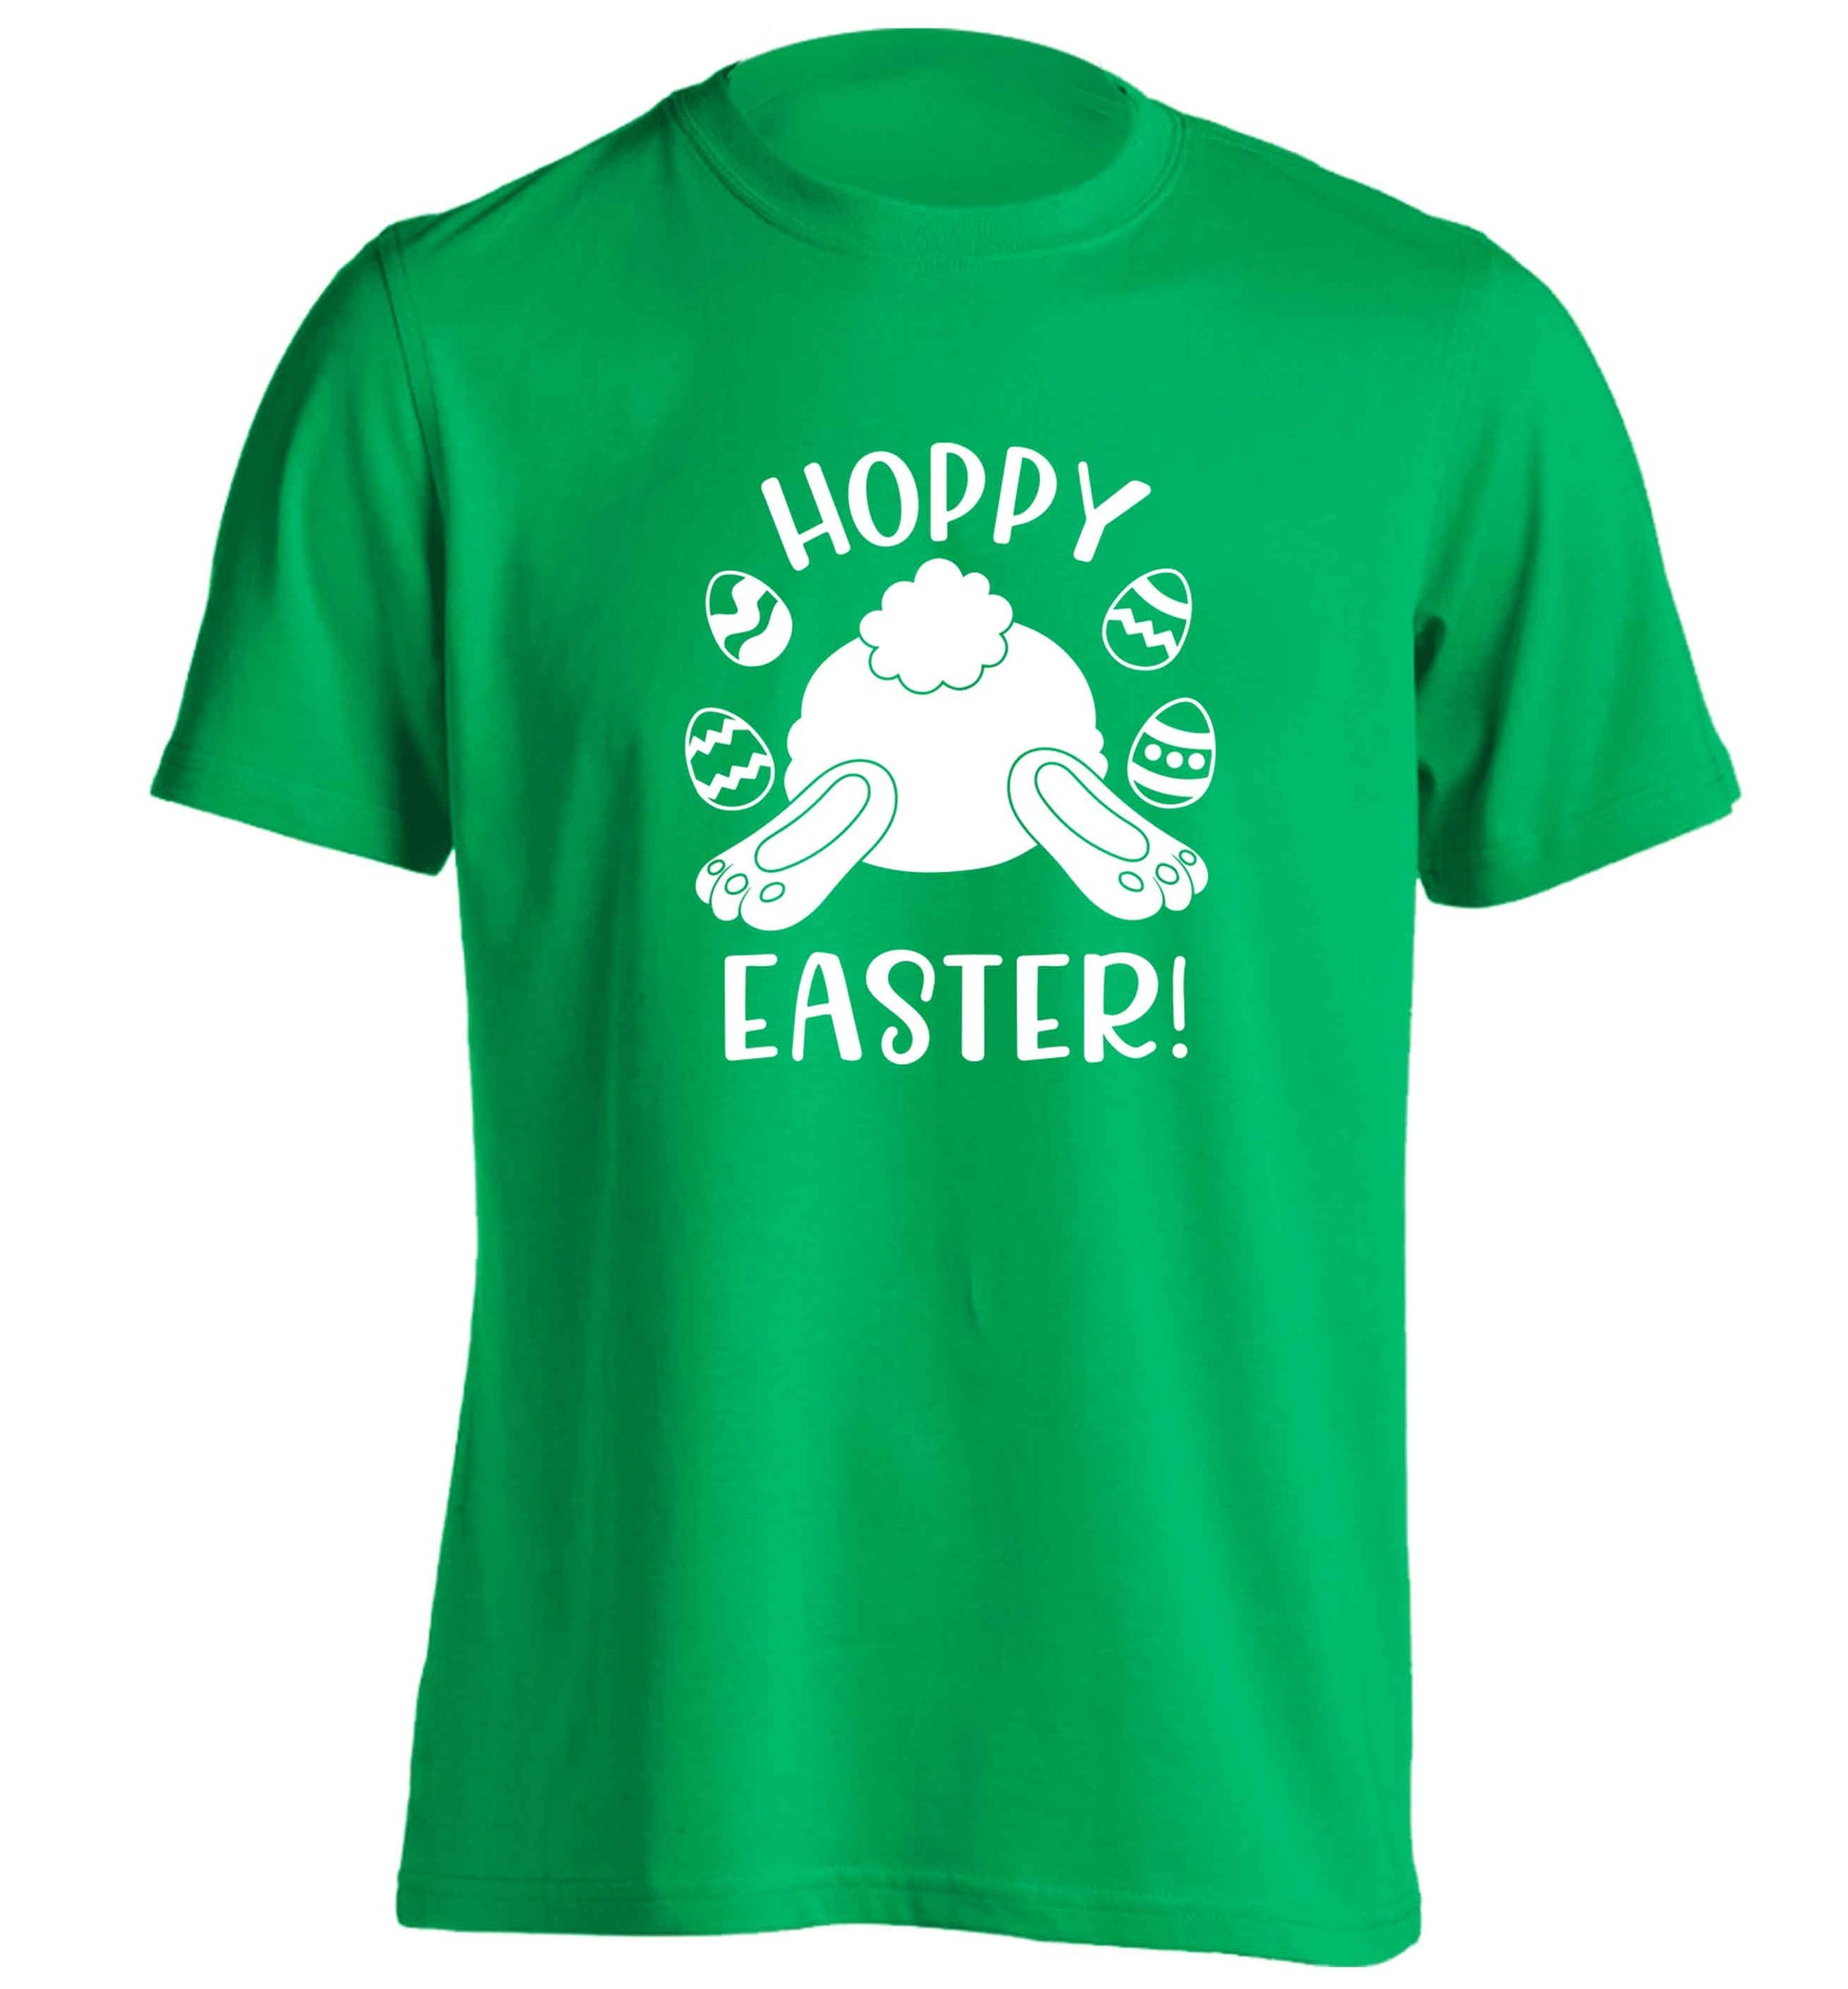 Hoppy Easter adults unisex green Tshirt 2XL